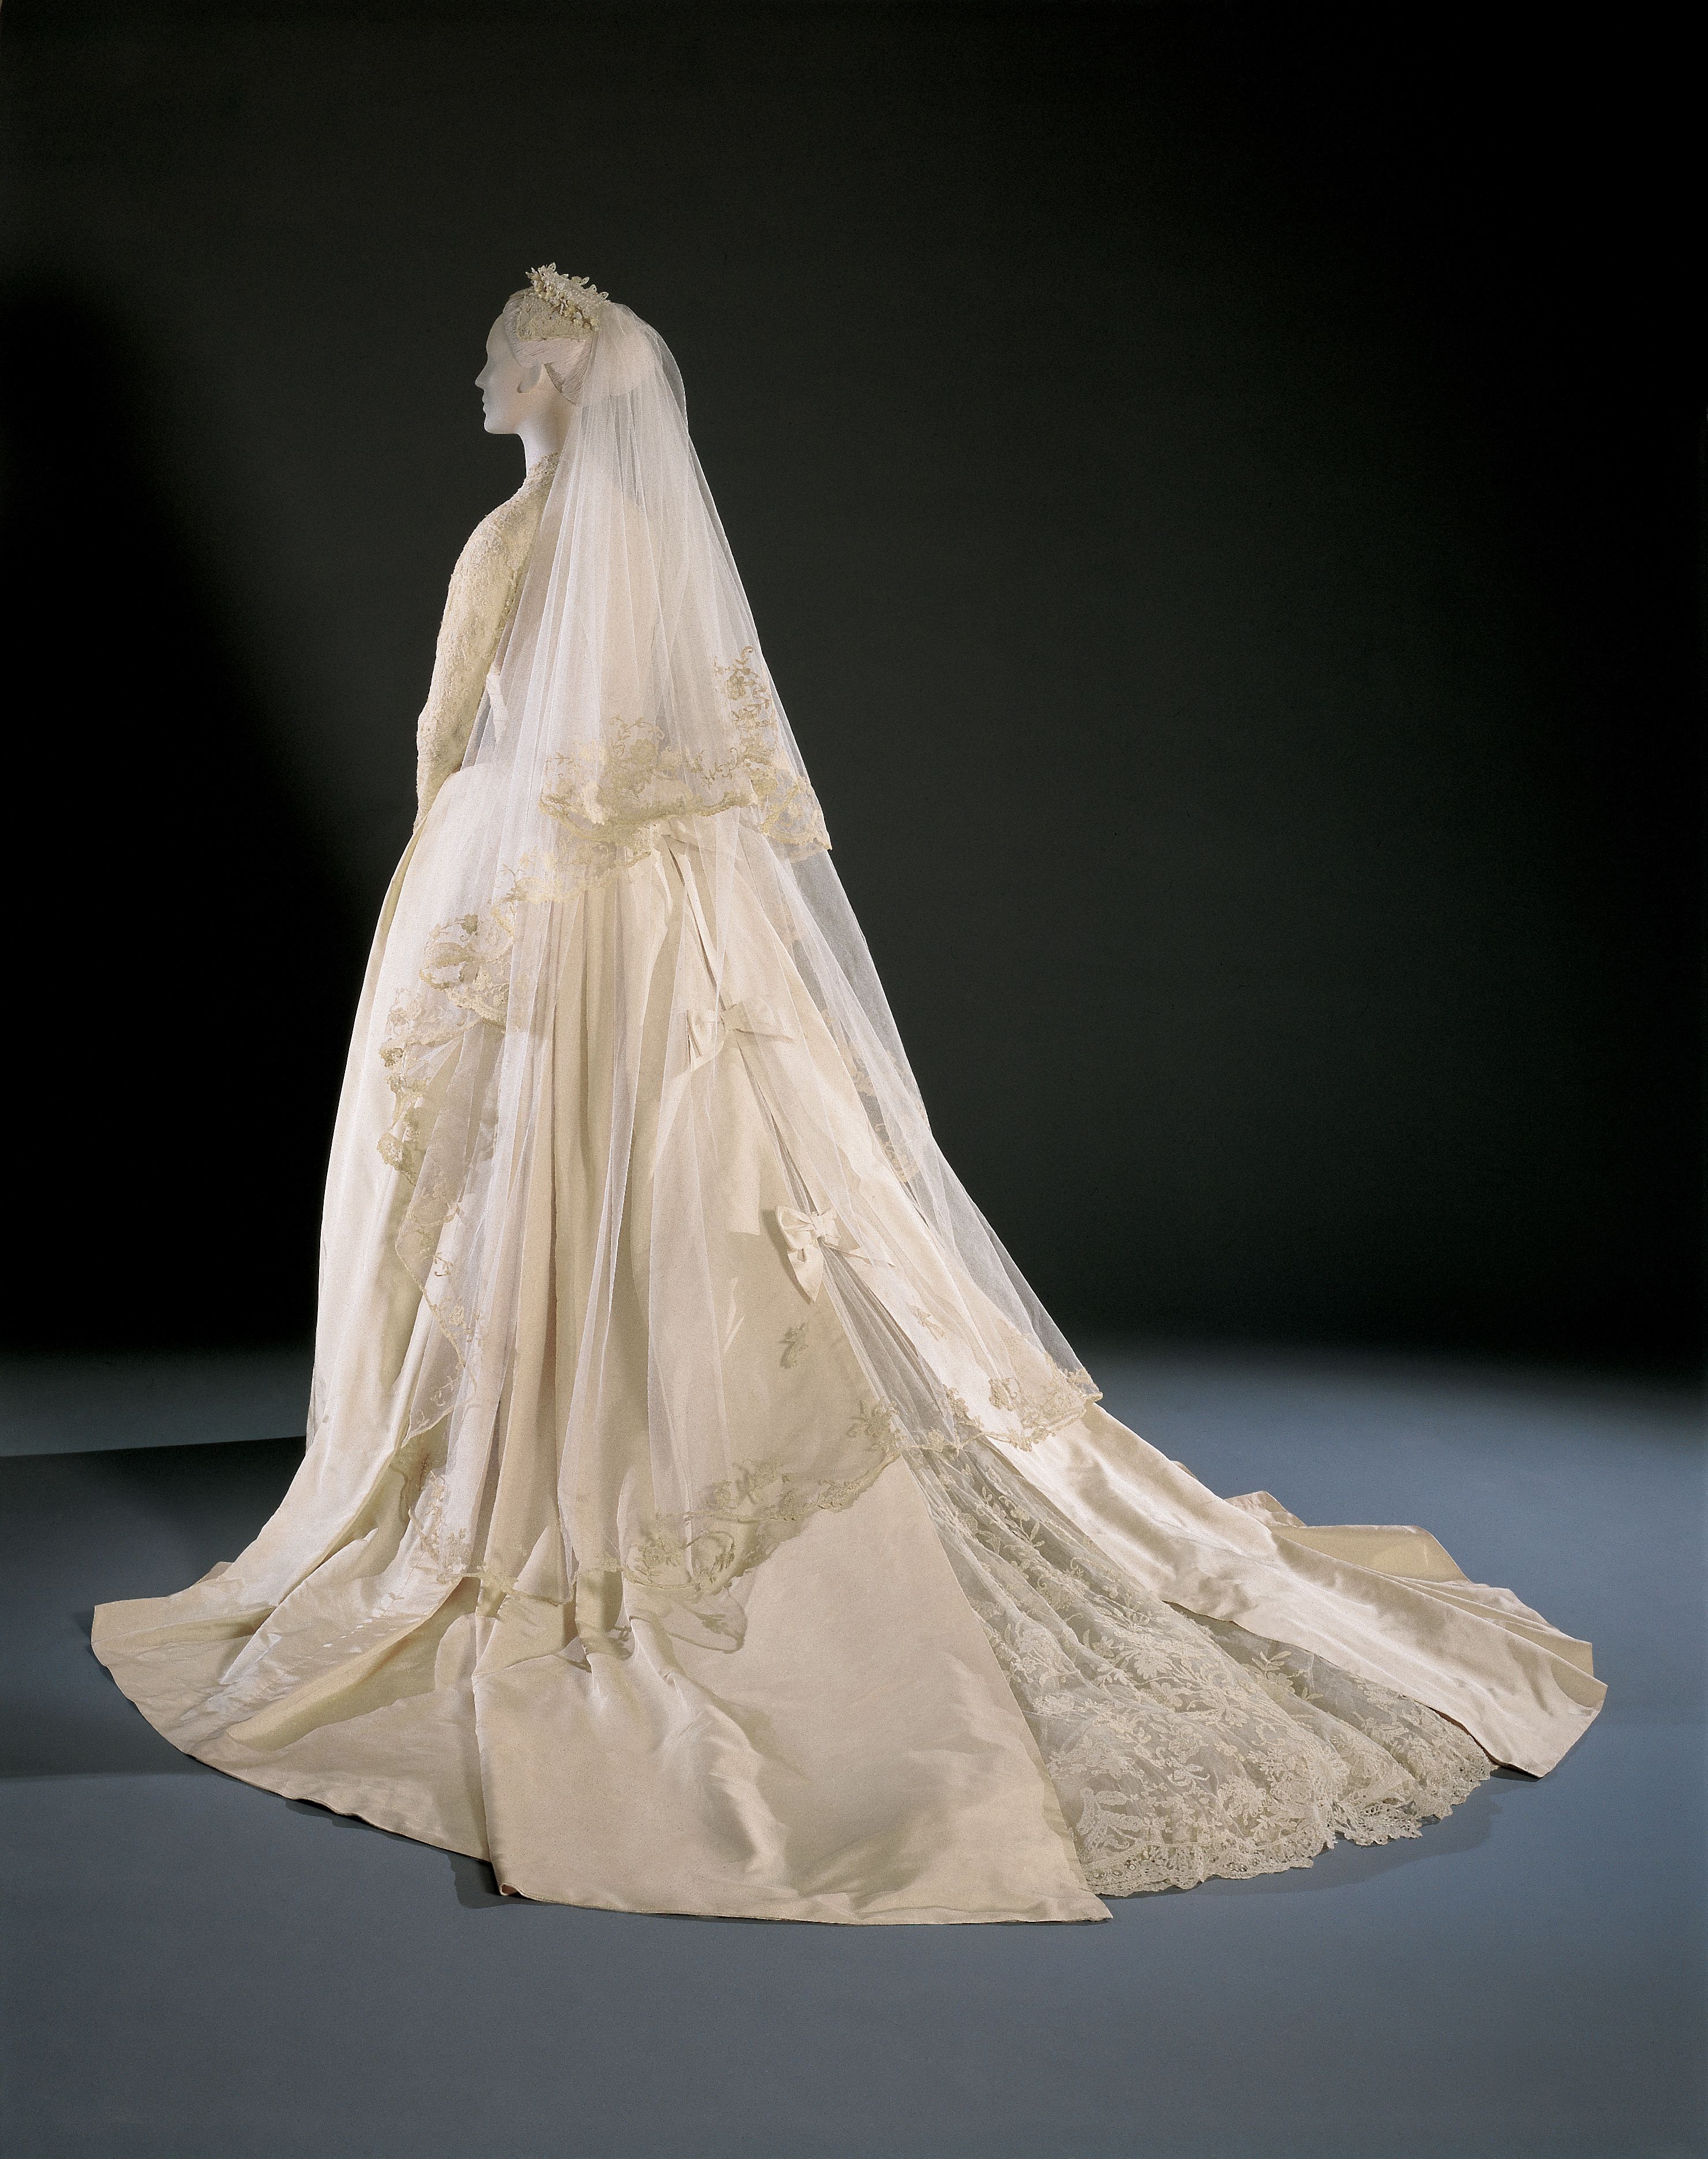 Grace Kelly's Wedding Details - Photos of Grace Kelly's Wedding Dress